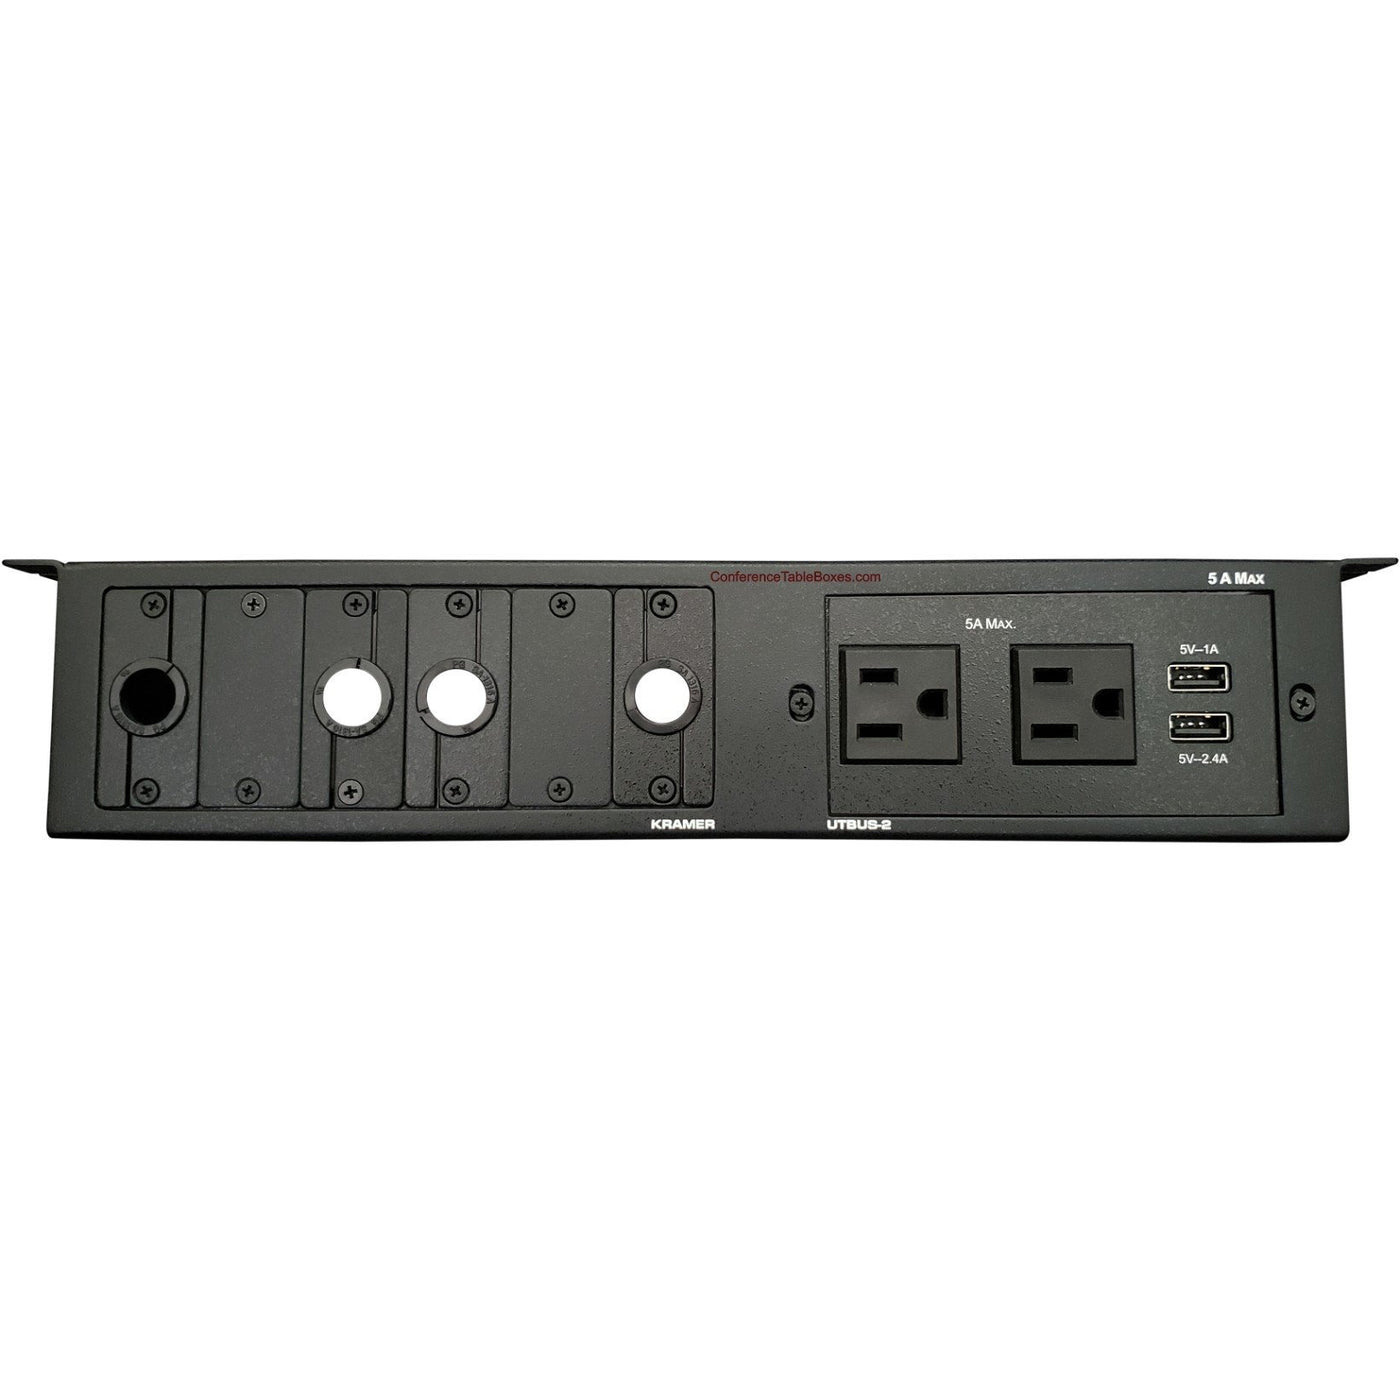 Under Table Edge Box 2 Power, 4 Grommet Holes, 2 Charging USB 